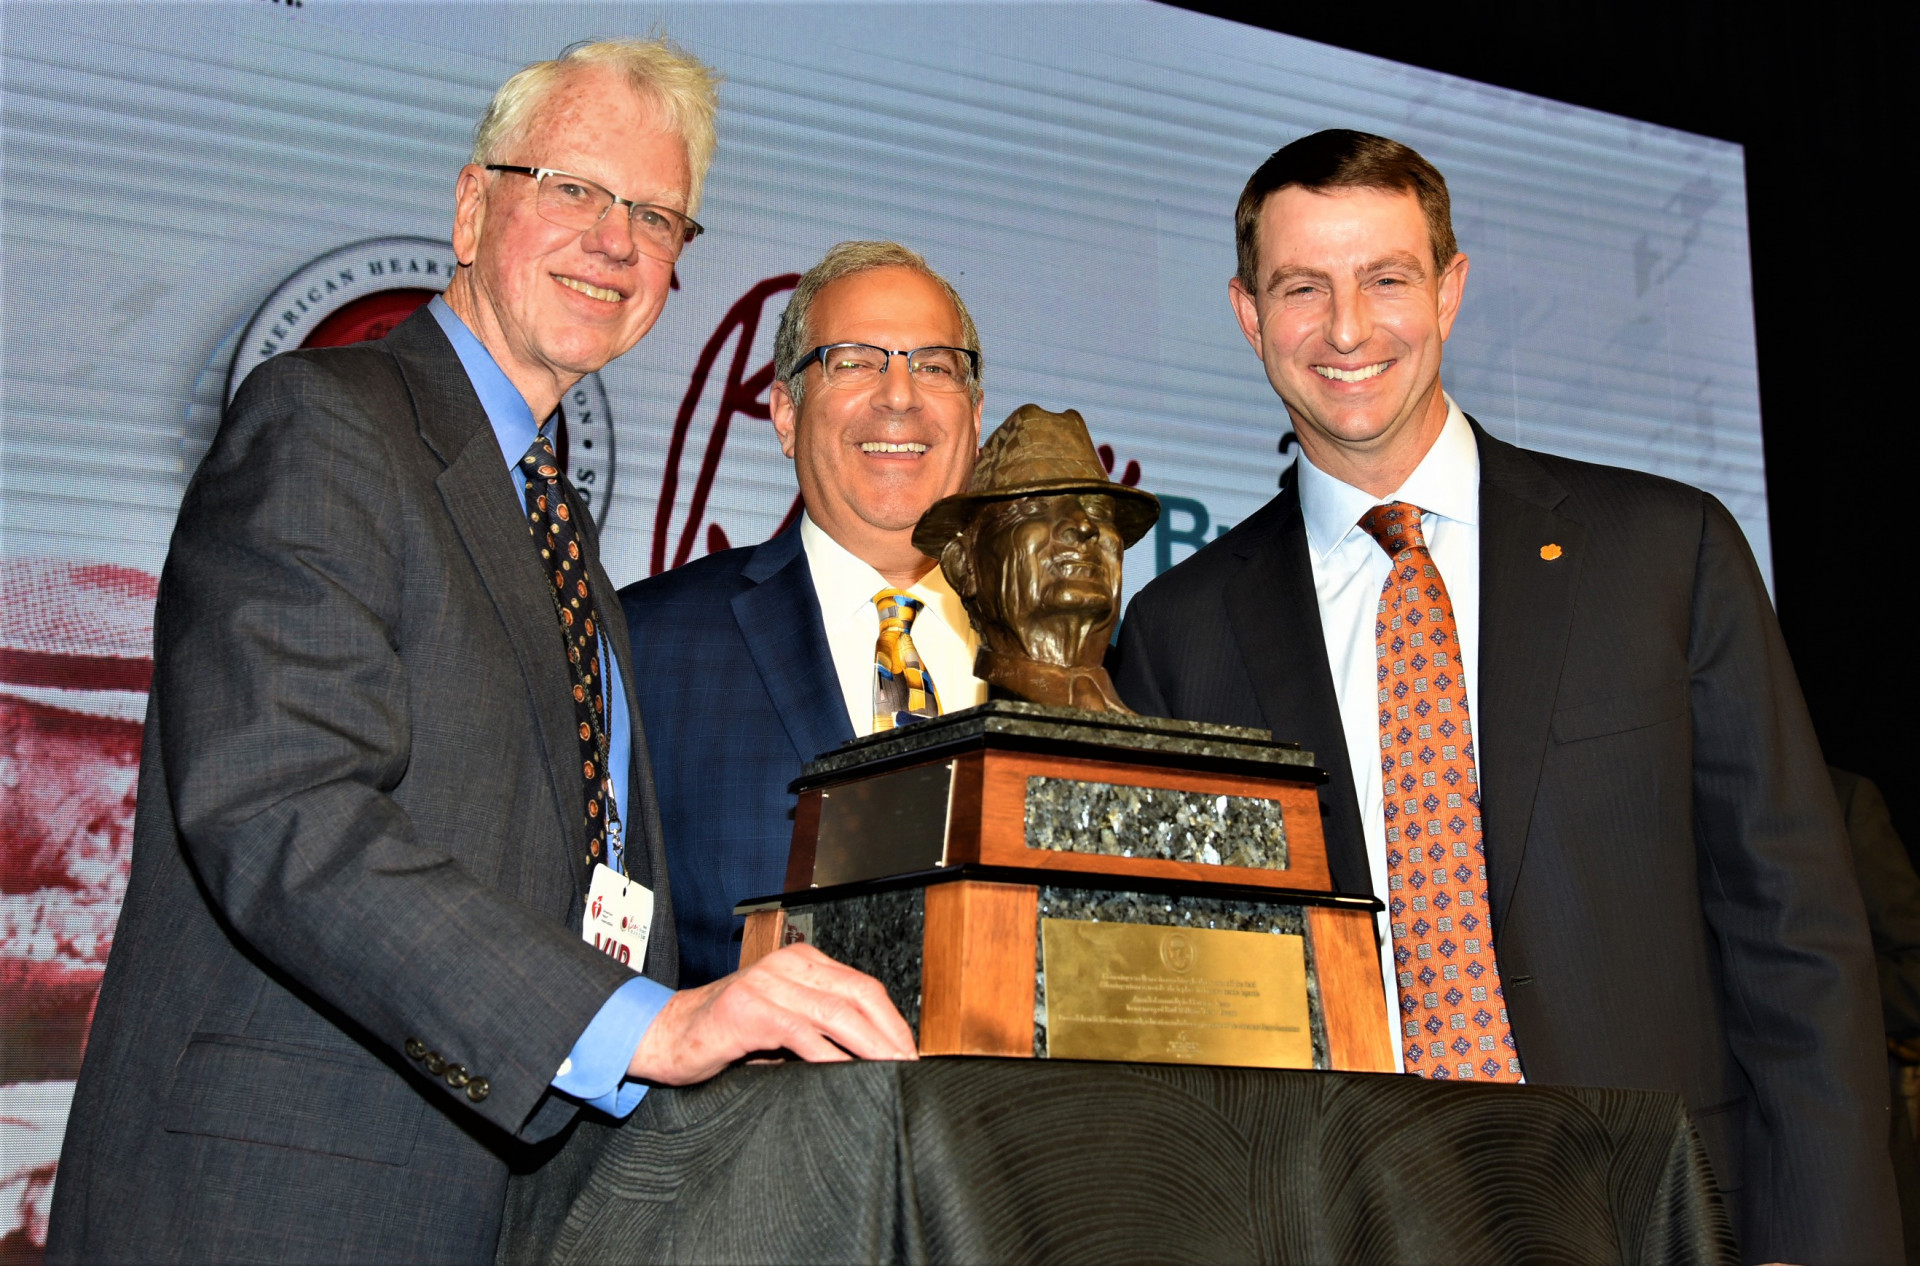 NSMA Board national chair Bob Ryan (left), NSMA executive director Dave Goren (center) and Clemson's Dabo Swinney pose with the Paul "Bear" Bryant Award